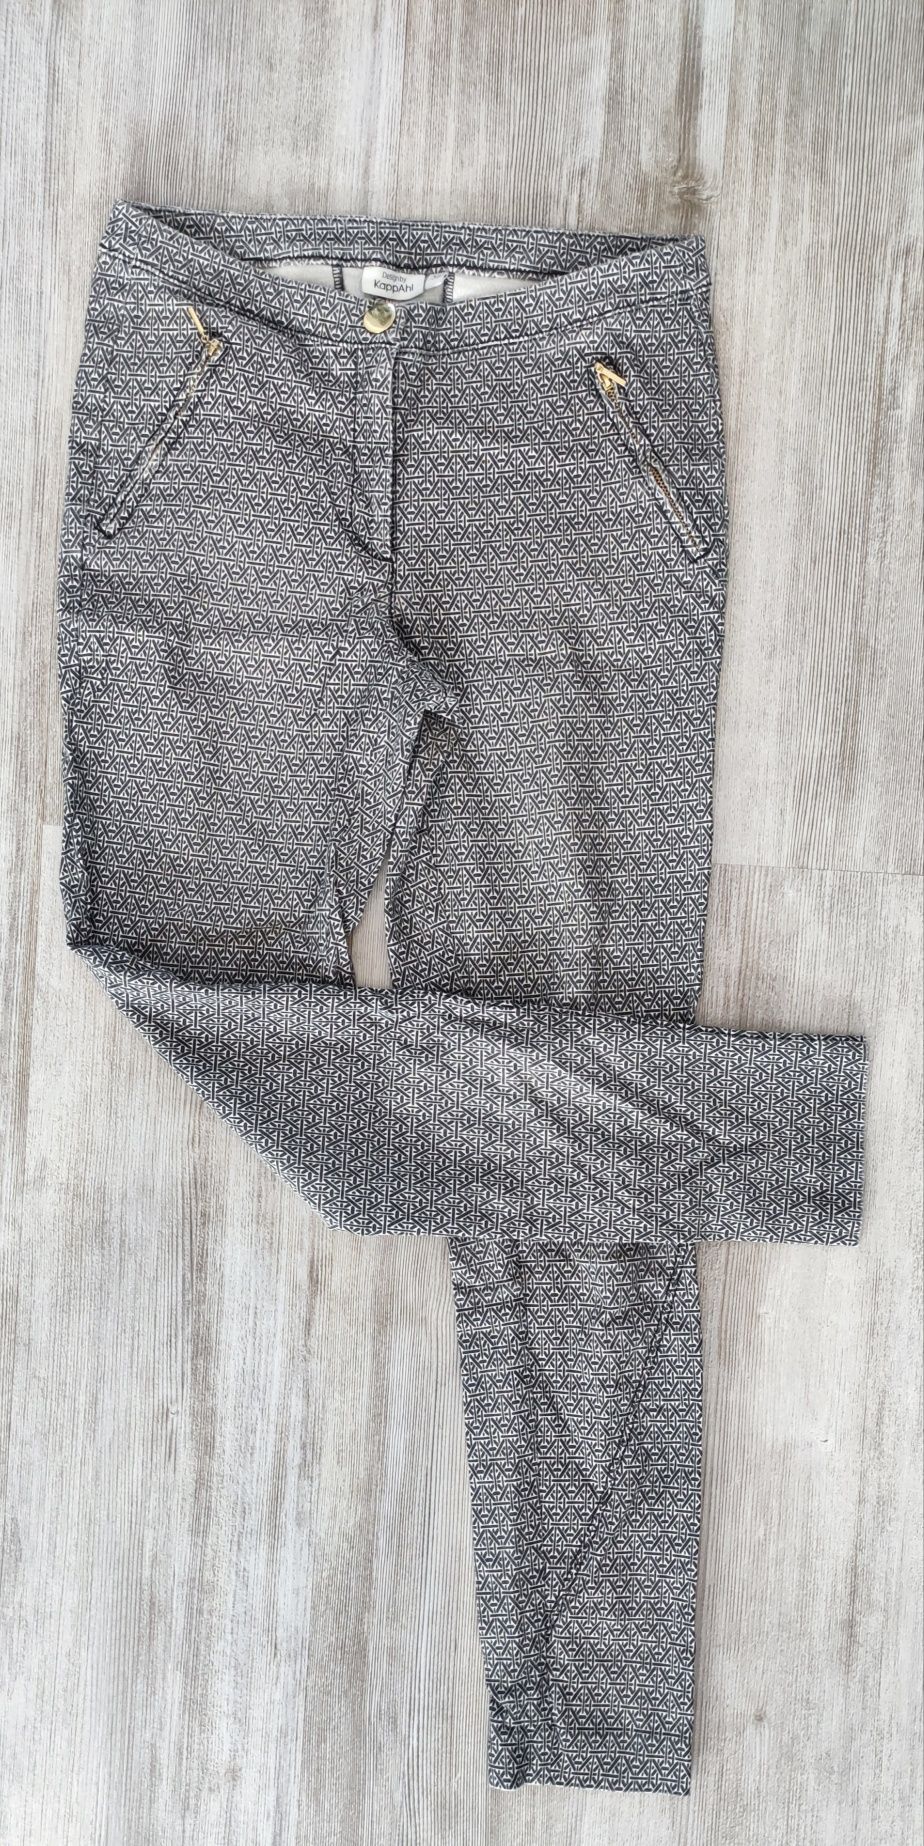 Spodnie, legginsy, elastyczne spodnie, chinosy 36